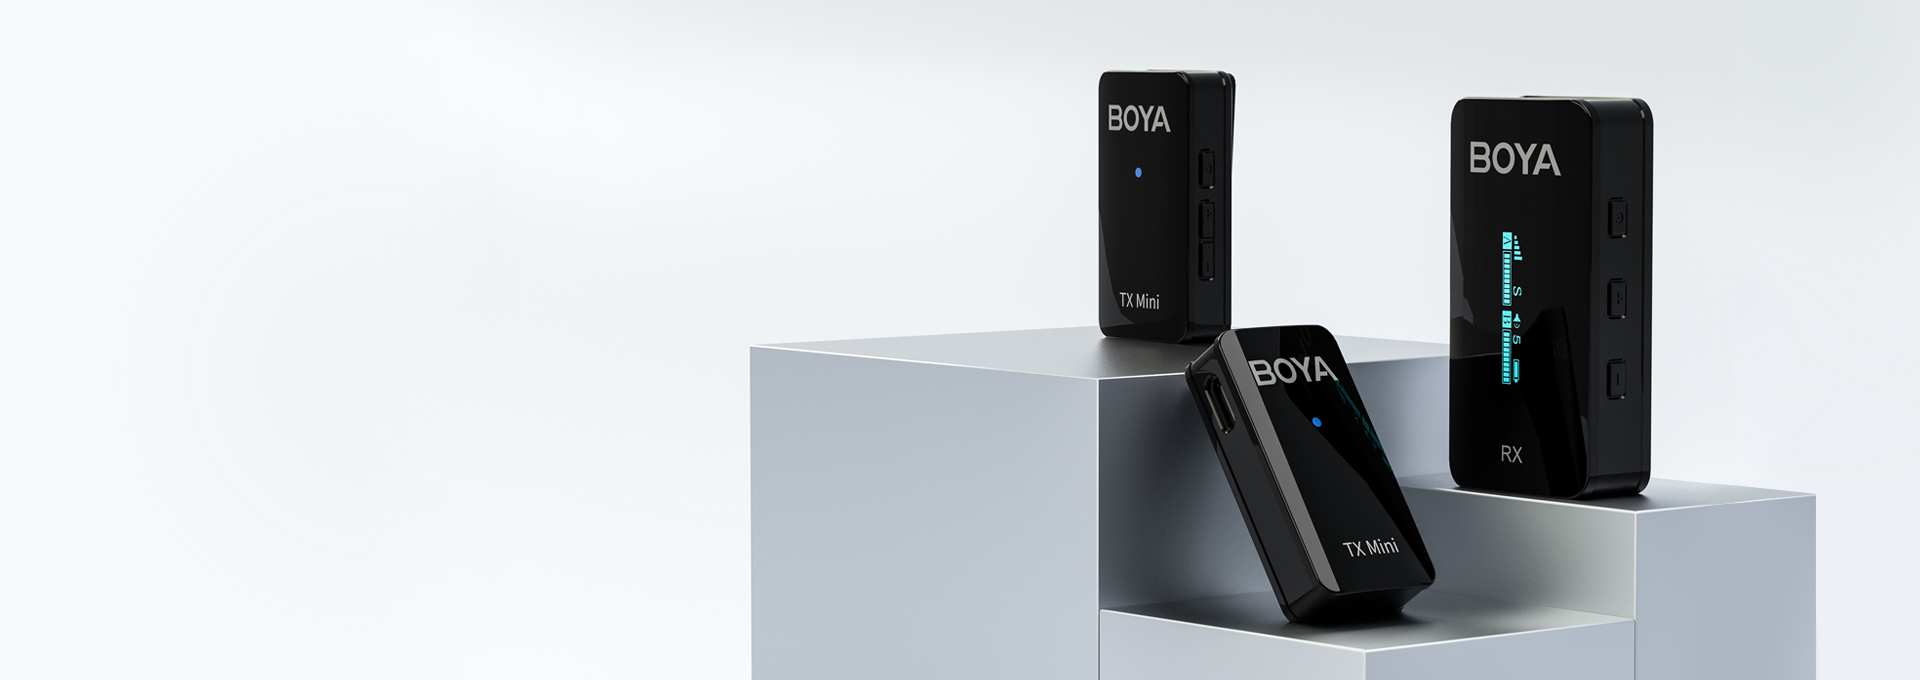 16847477919498437 Boya Boya BY-XM6-S2 Mini Ultracompact 2.4GHz Dual-Channel Wireless Microphone System